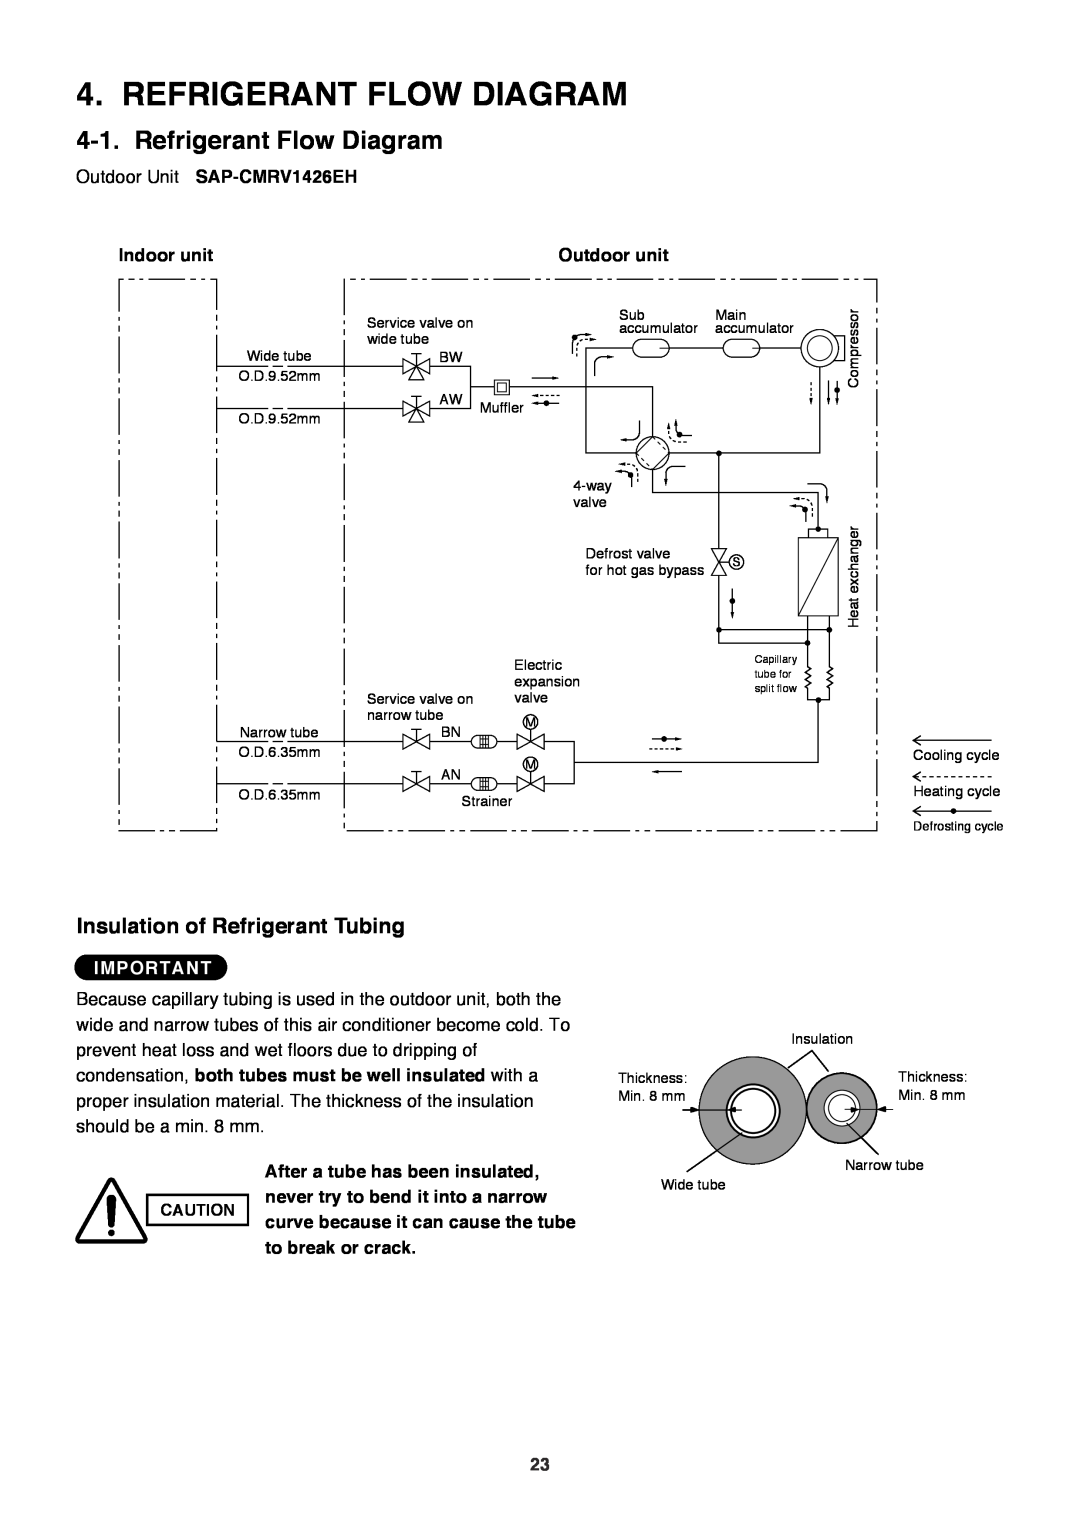 Sanyo SAP-CMRV1926EH, SAP-CMRV1426EH-F Refrigerant Flow Diagram, Outdoor Unit SAP-CMRV1426EH, Indoor unit, Outdoor unit 